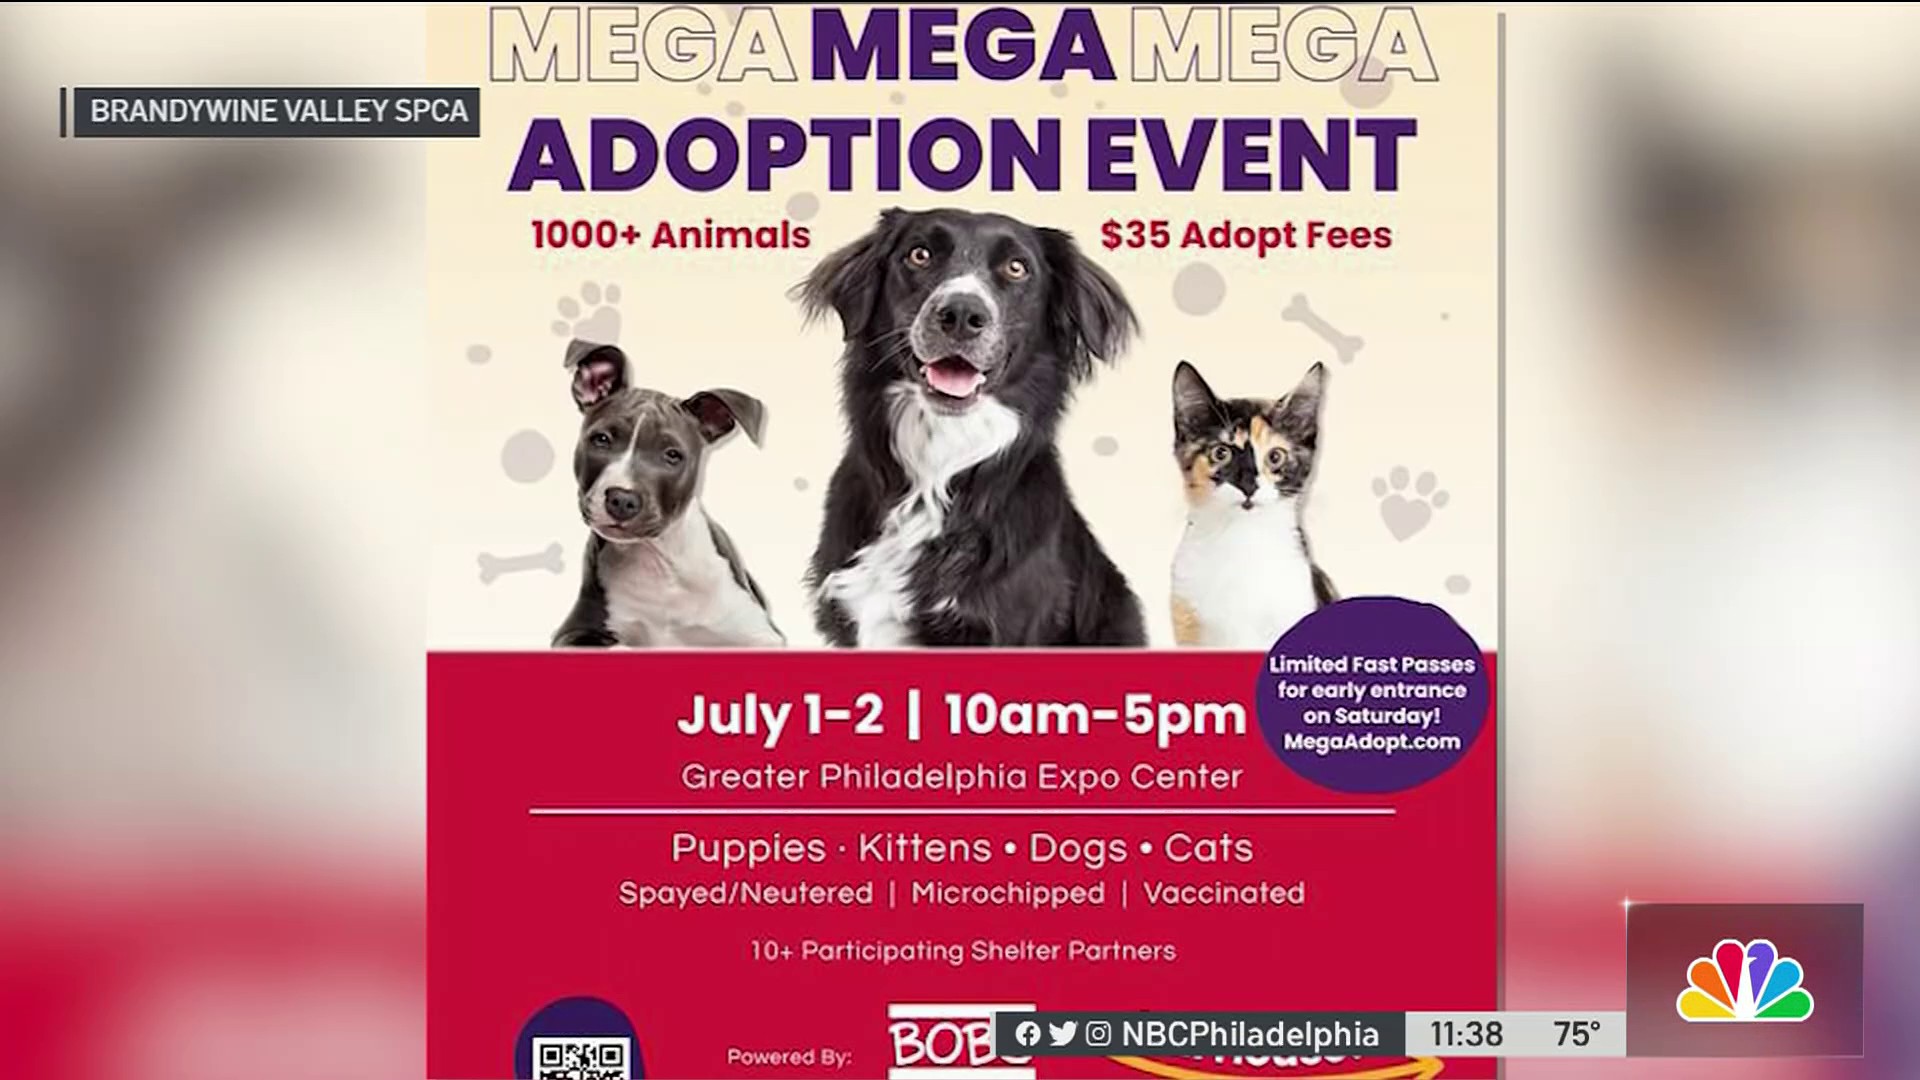 Pet Adoption Events